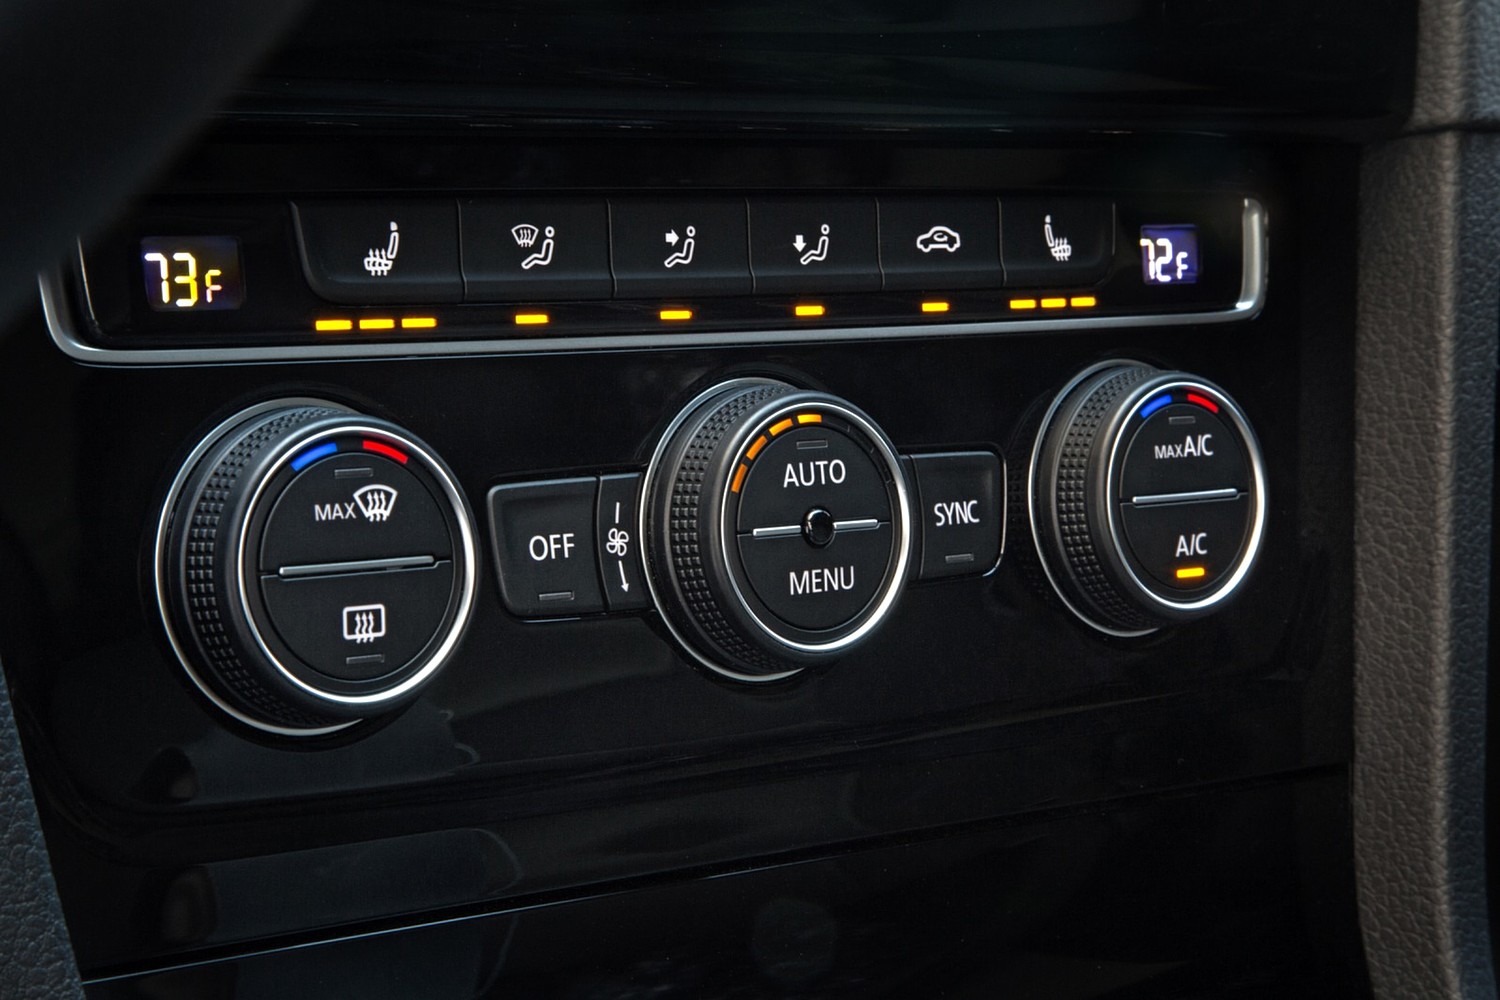 Volkswagen Golf SportWagen TSI SEL Wagon Dual-zone Climate Controls (2015 model year shown)